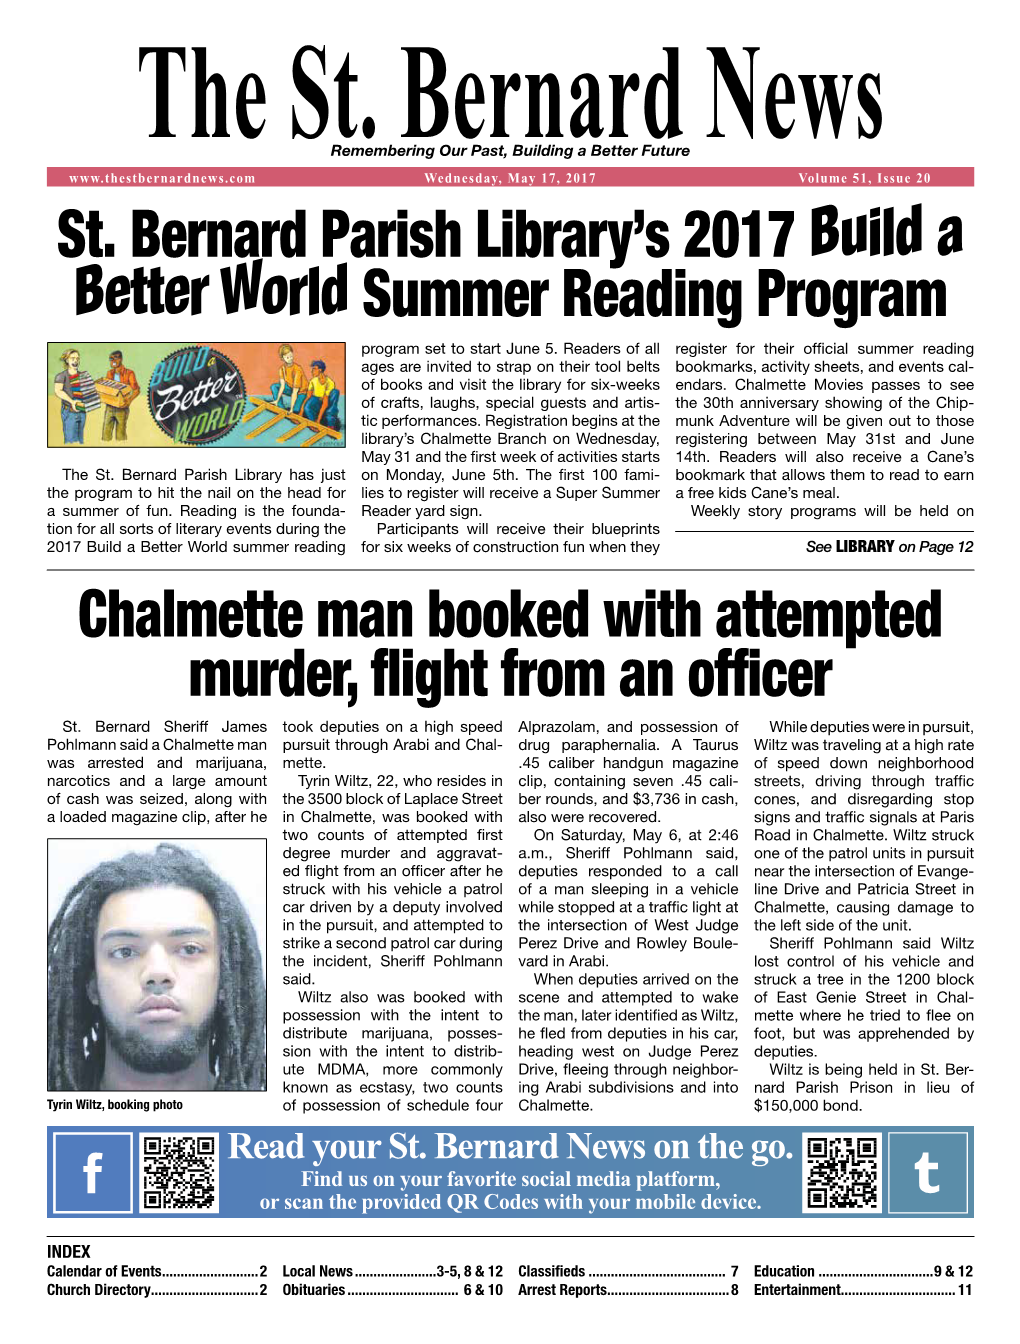 Chalmette Man Booked with Attempted Murder, Flight from an Officer St. Bernard Parish Library's 2017 Build a Better World Summ